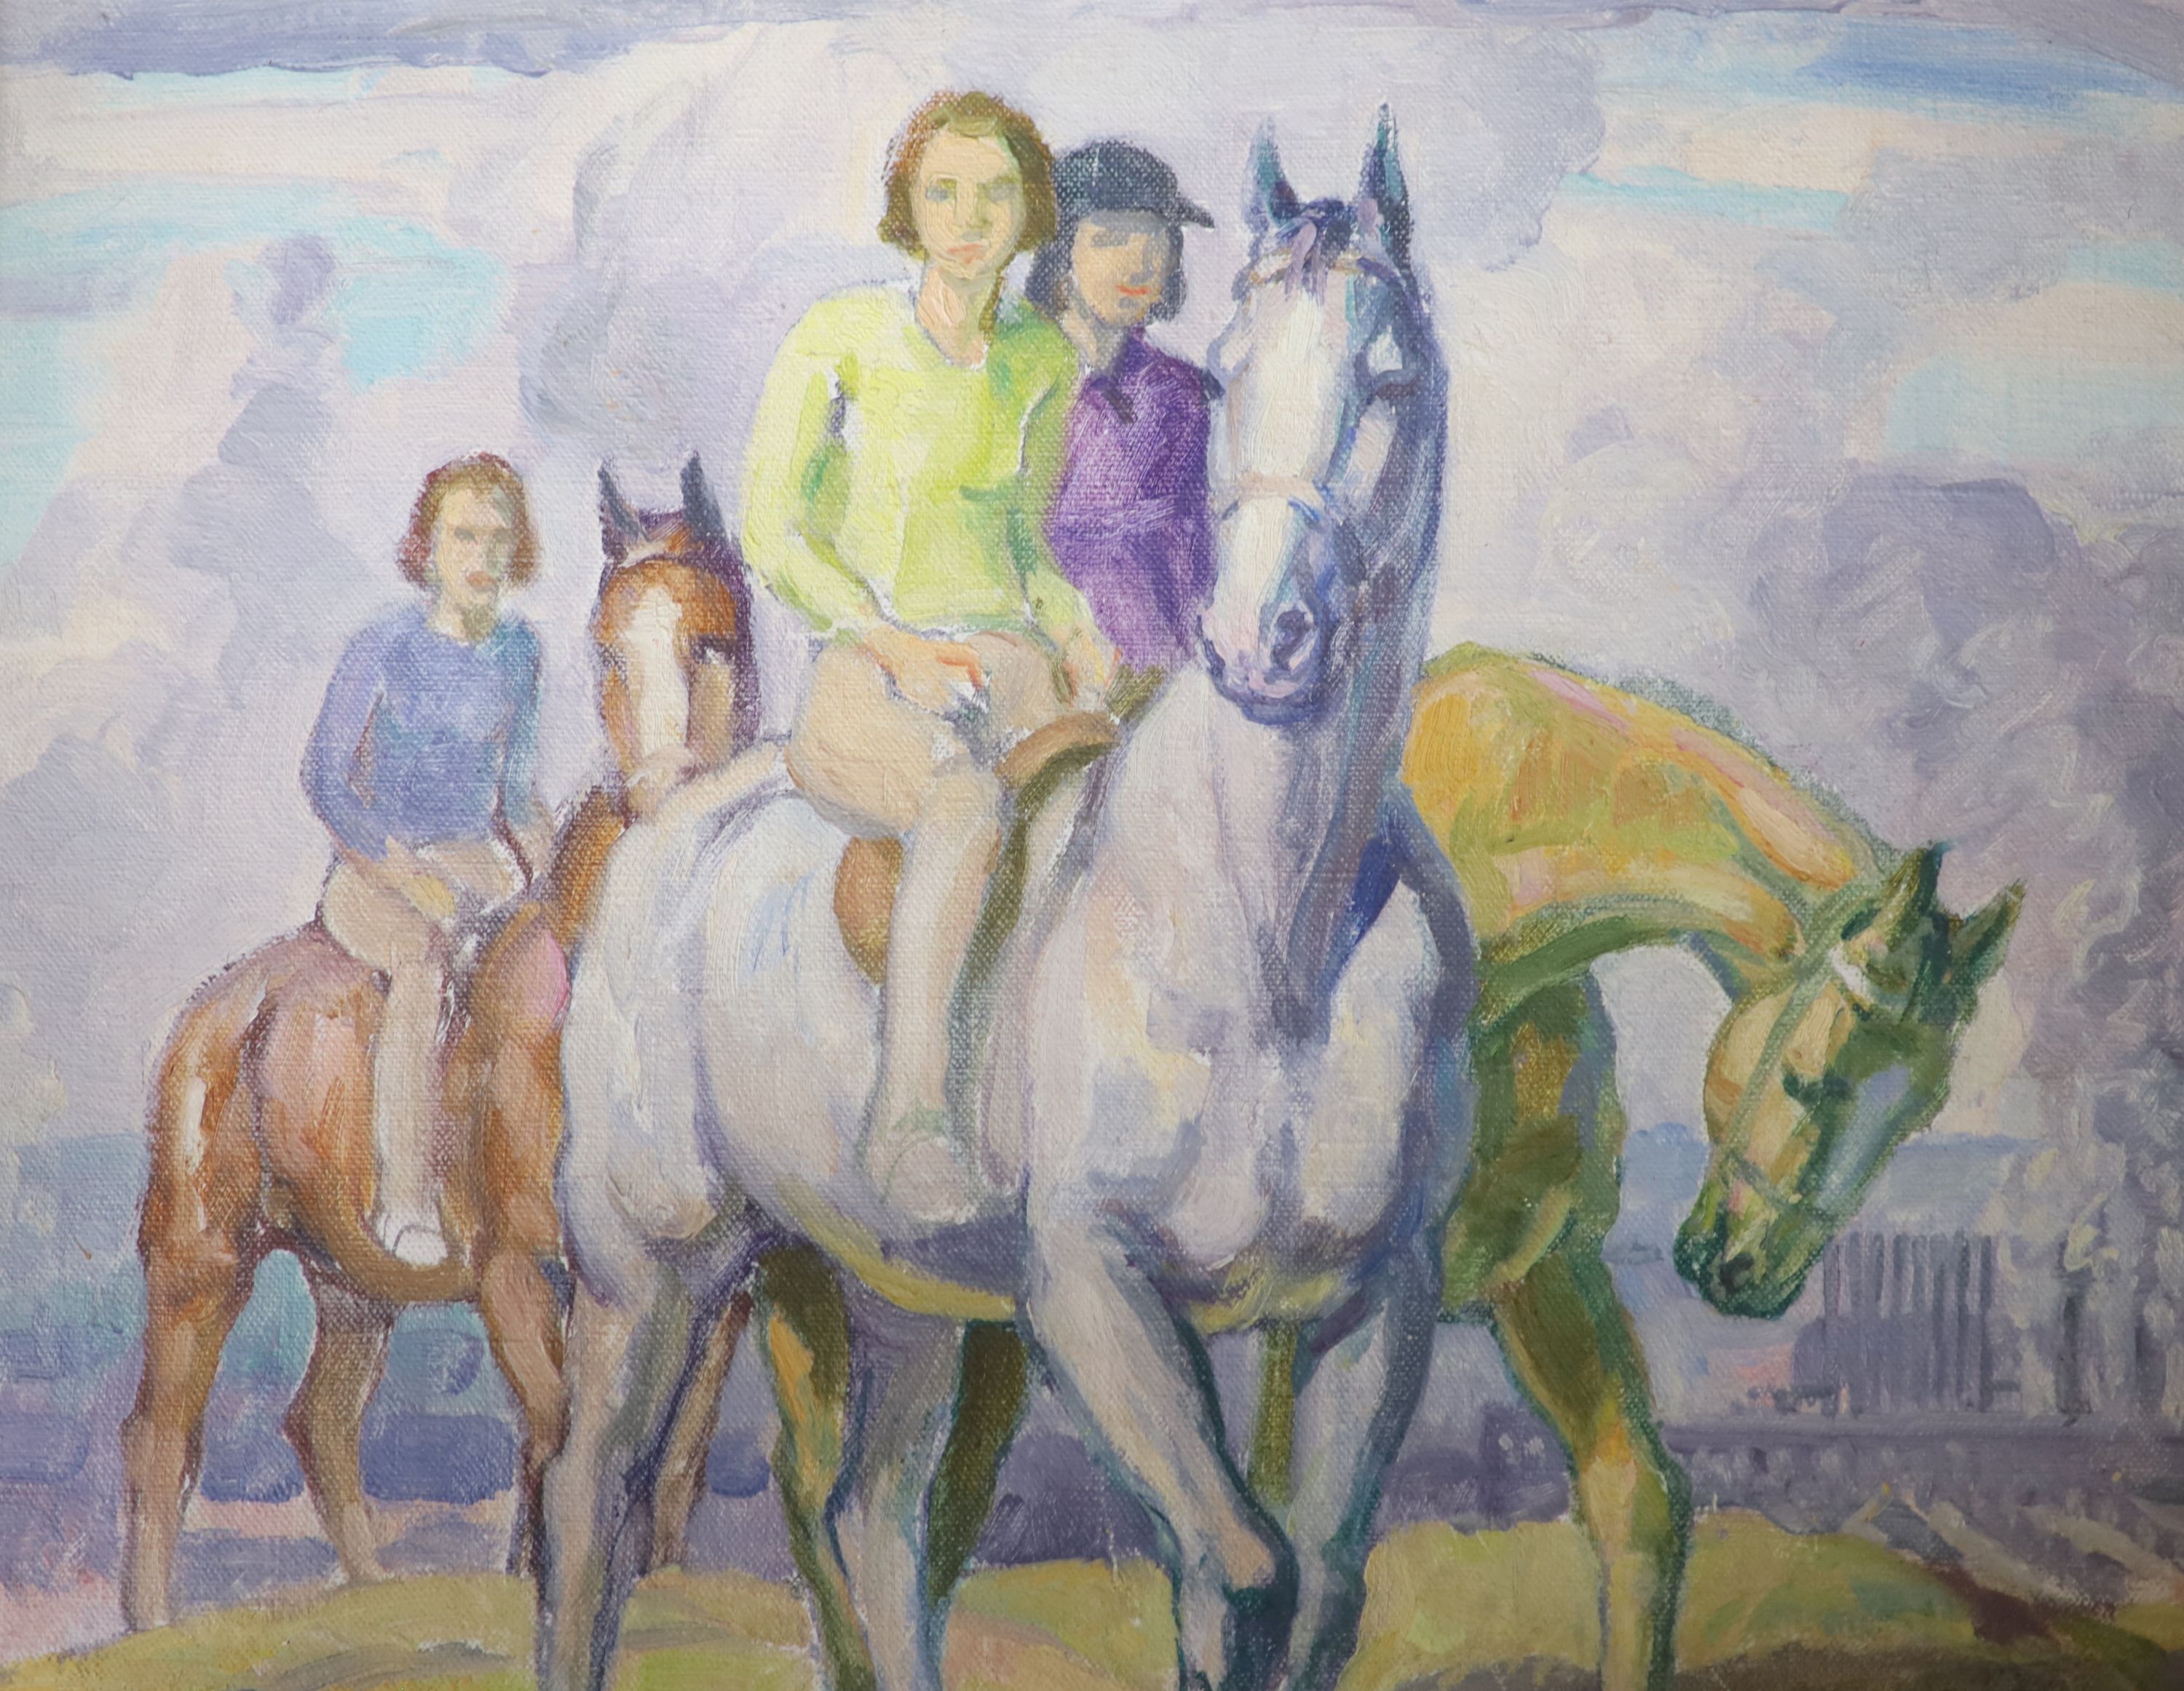 Harold Dearden (1888-1962), oil on canvas, Sketch of women riding horses, 27 x 34cm